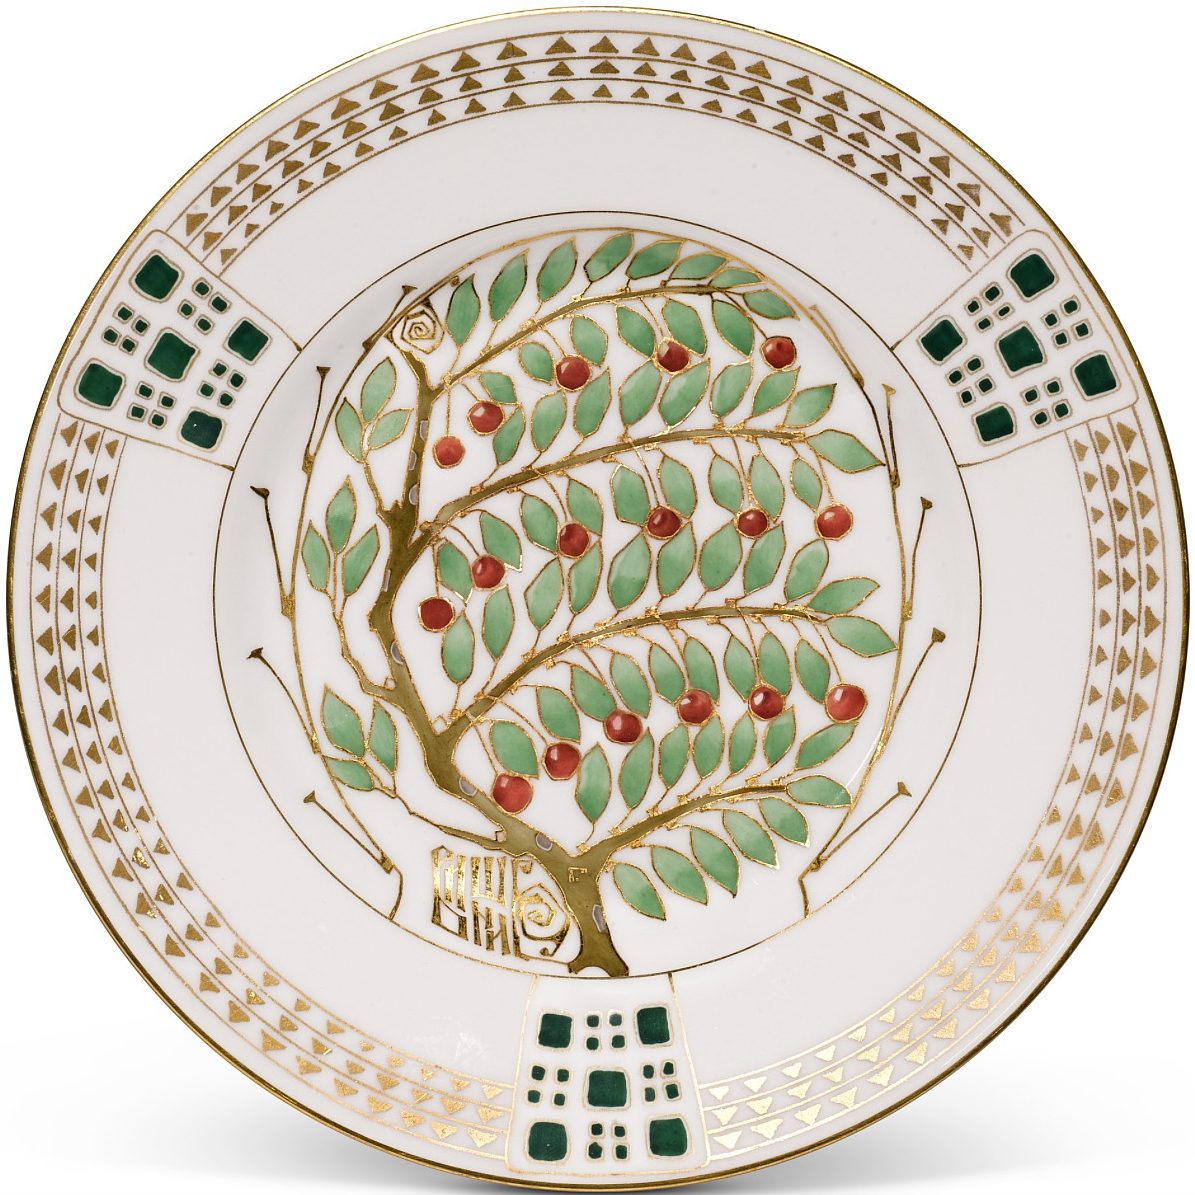 Kornilov Brothers porcelain plate "Cherry" by Ivan Galnbek